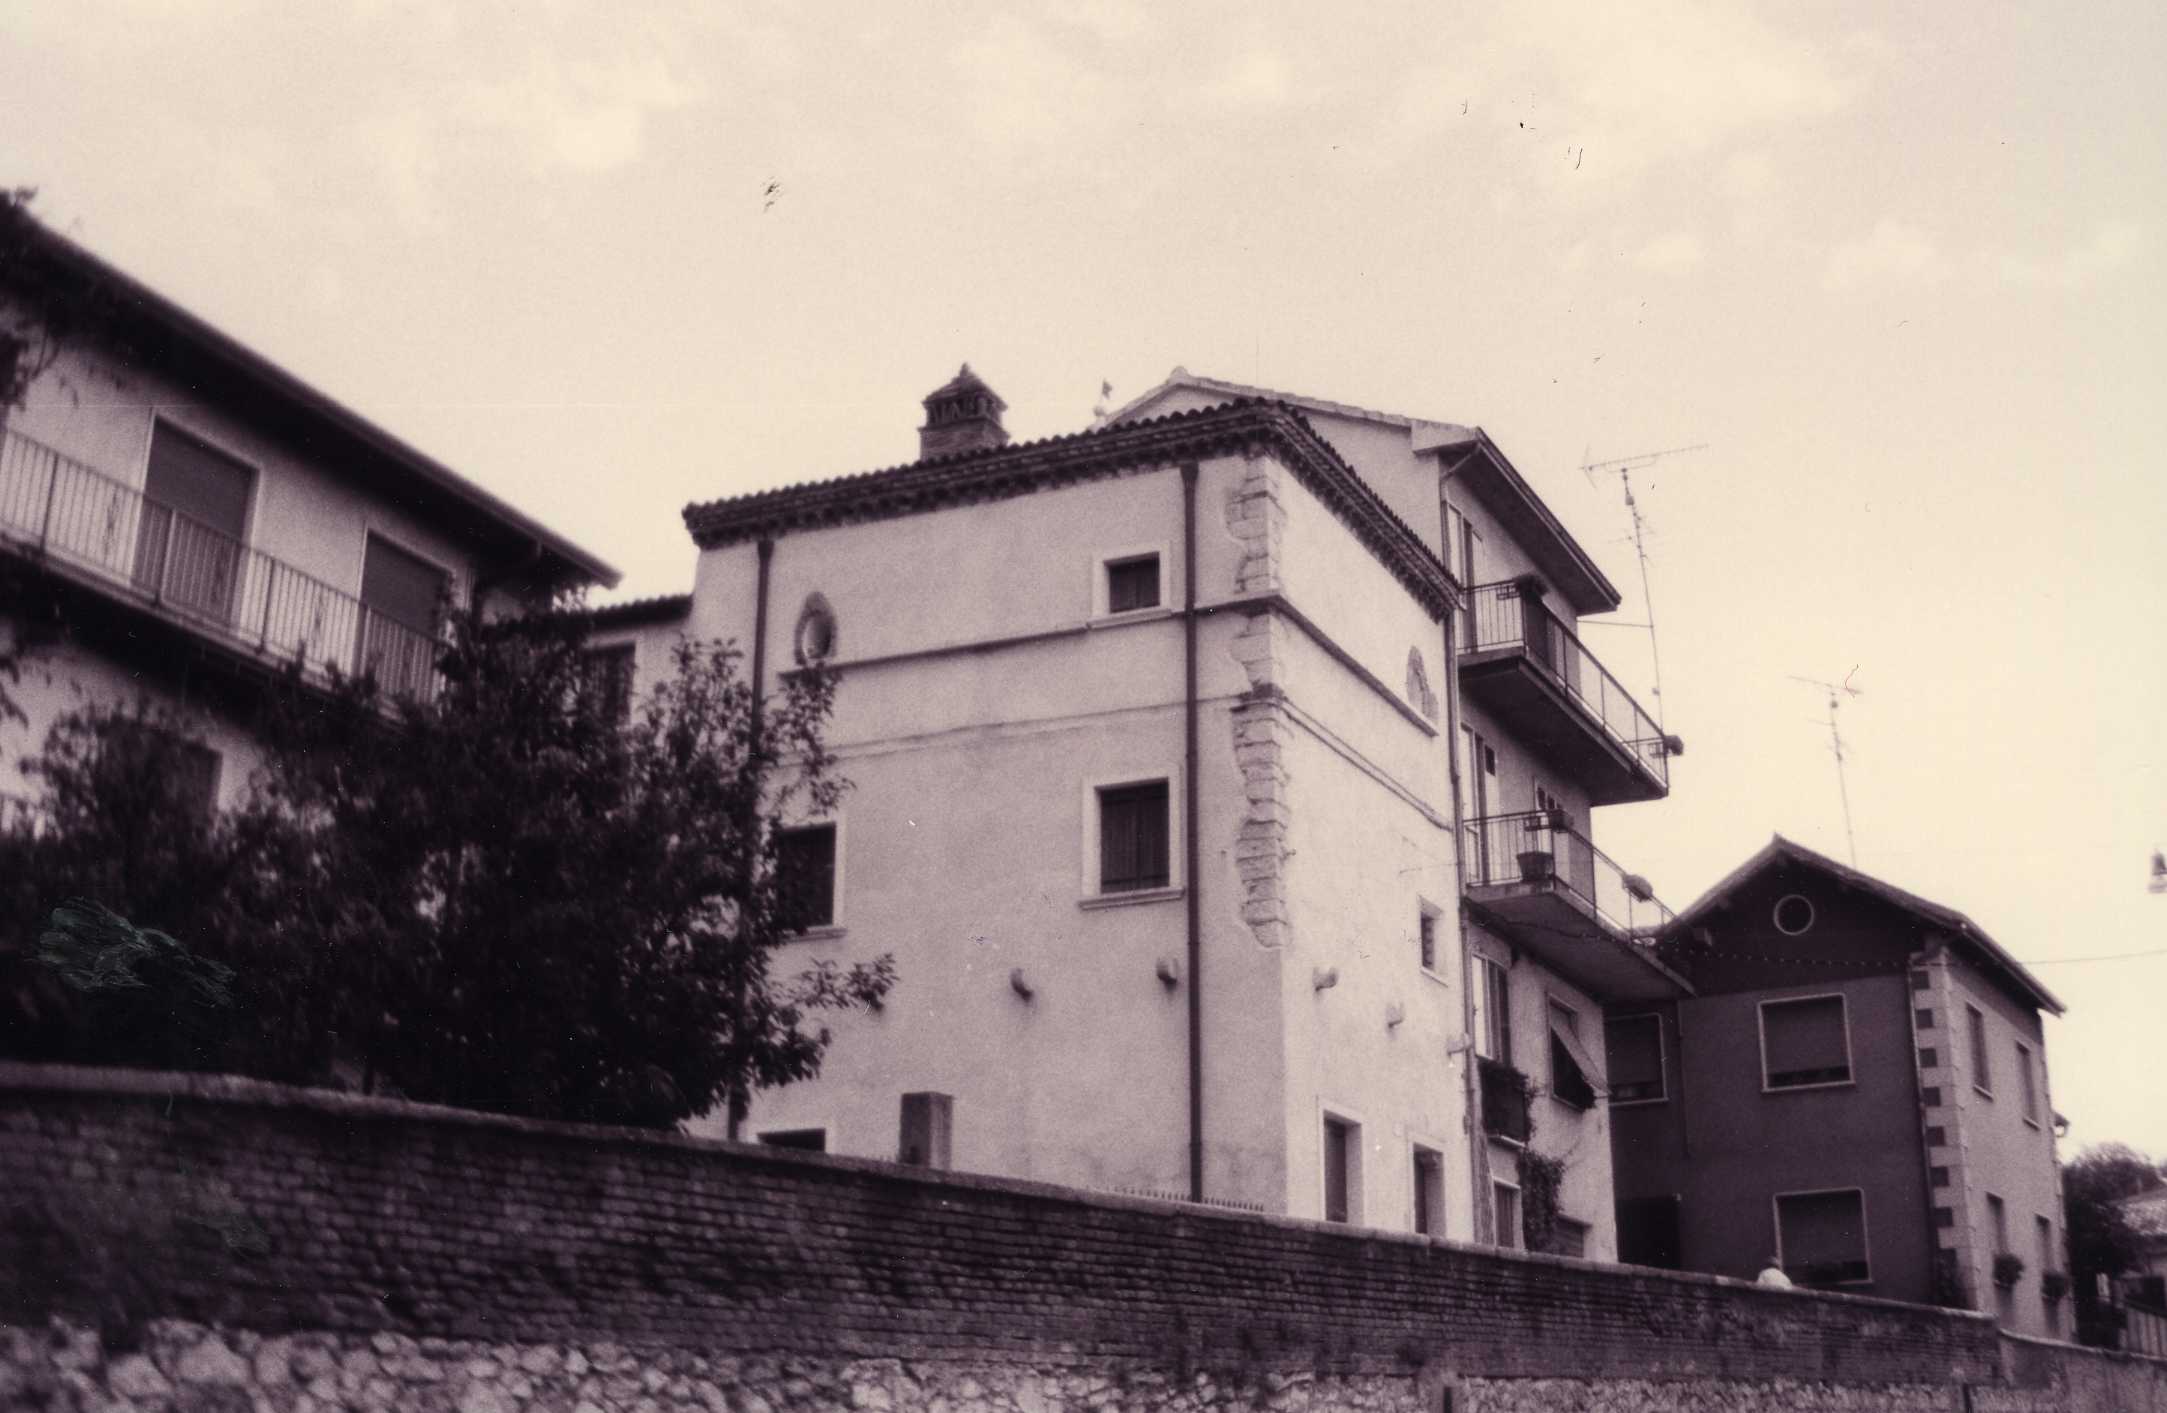 colombara (casa a torre) - Monteforte d'Alpone (VR)  (XV)